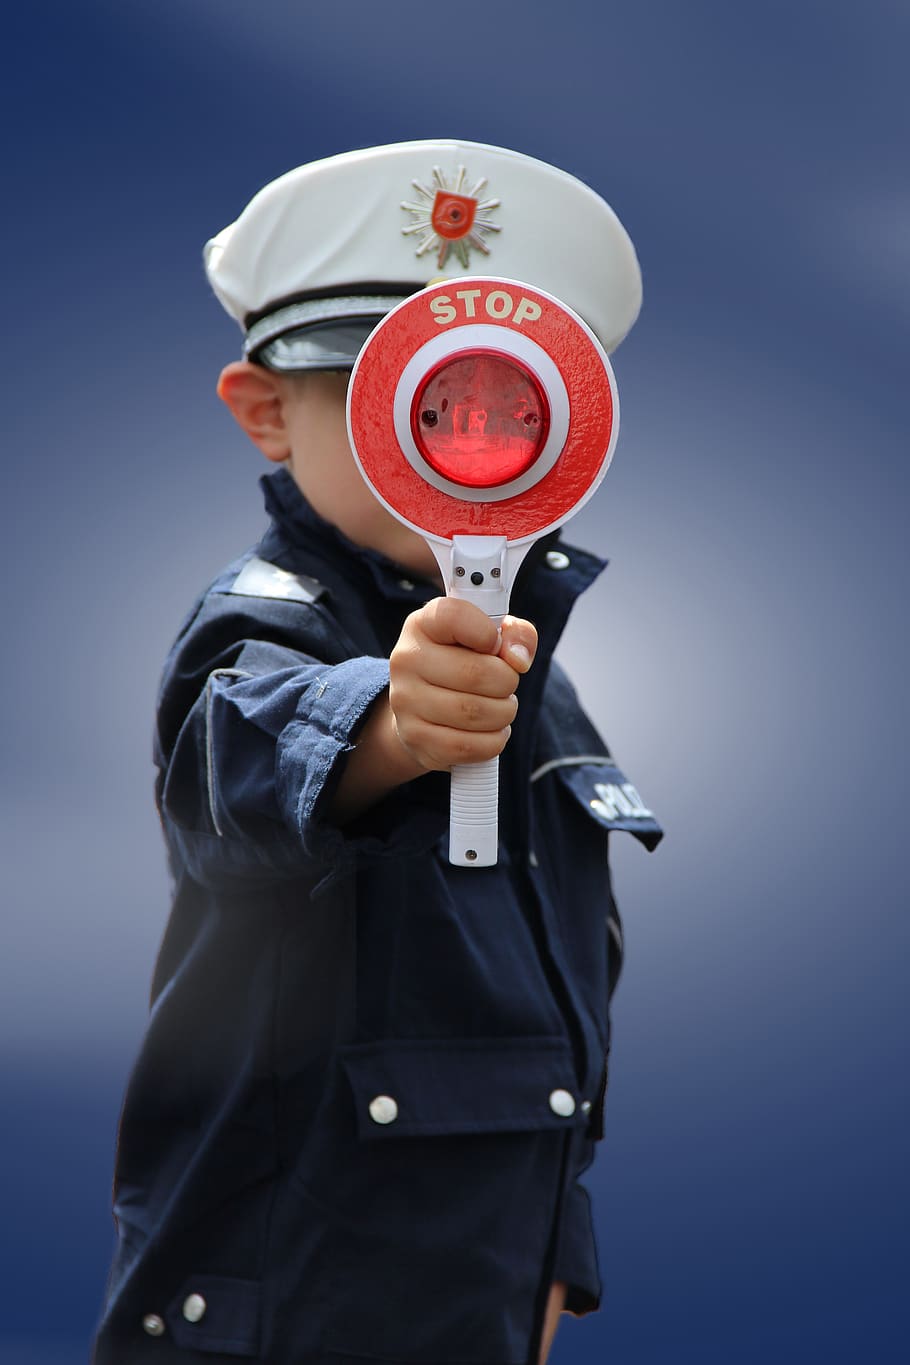 police, trowel, stop, boy, panel, child, funny, cap, warning, shield